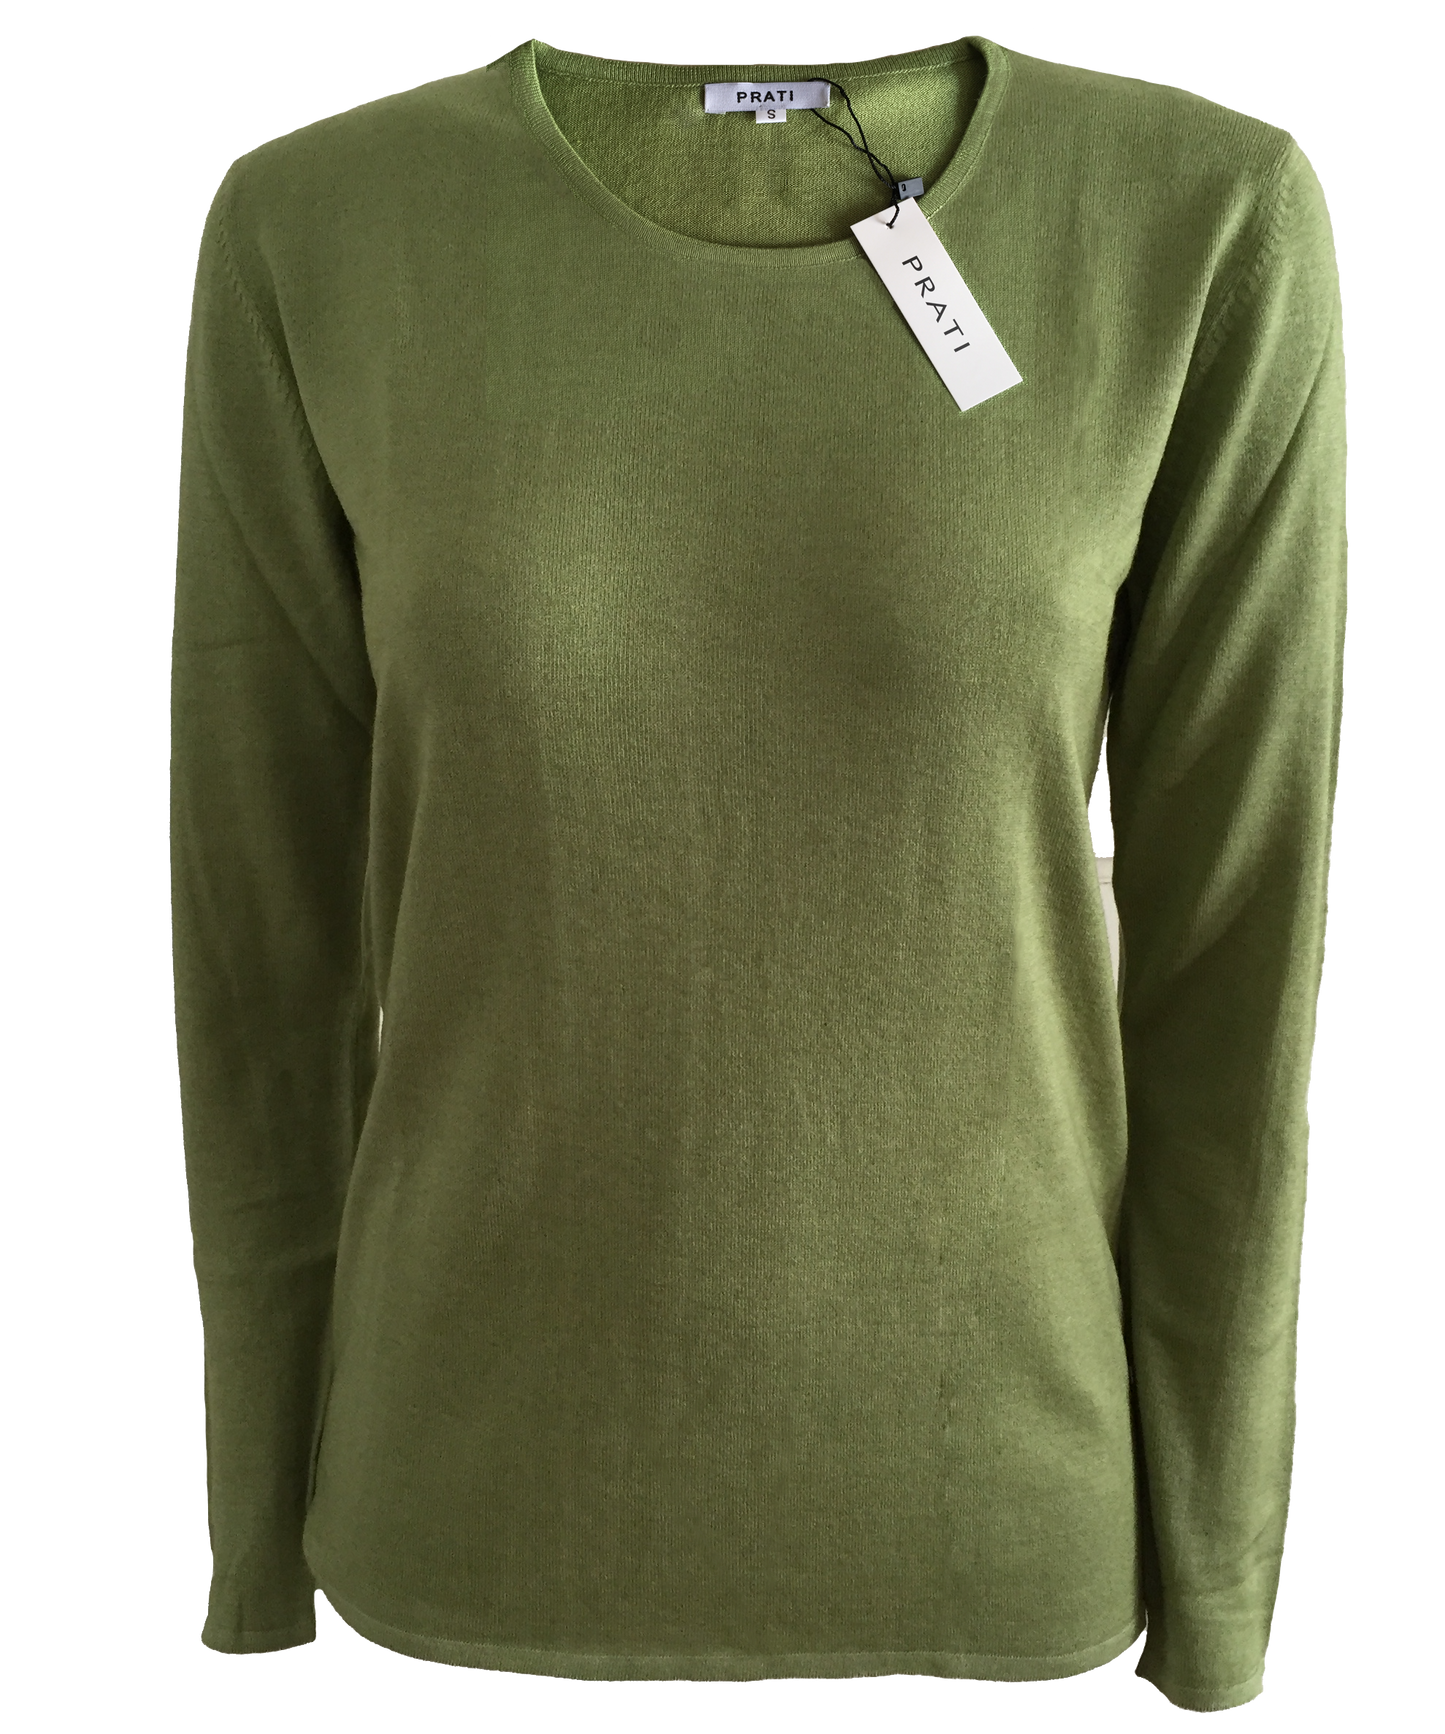 Cashmere Silk crew neck sweater t shirt palm green